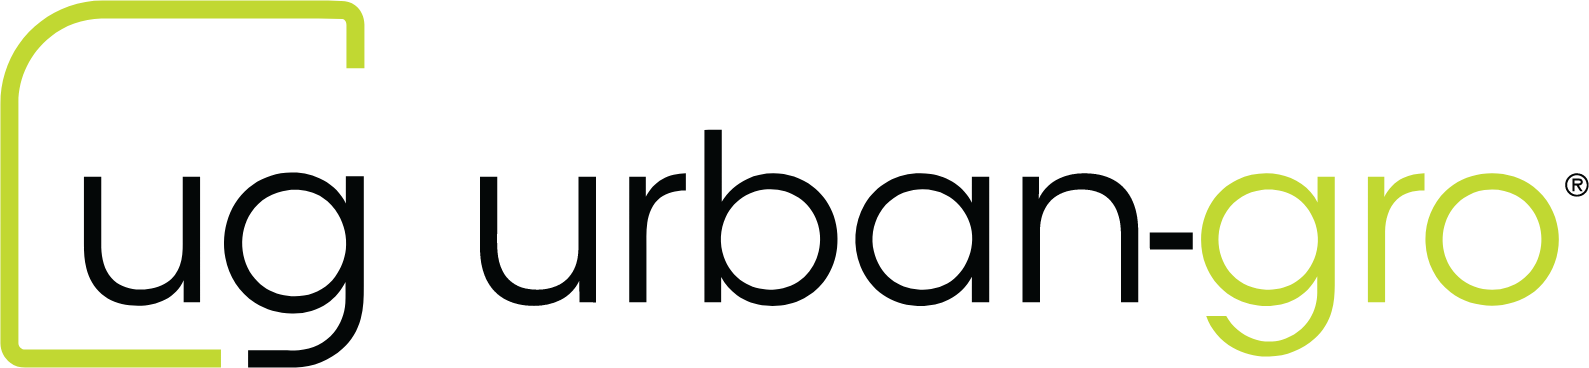 Urban-gro
 logo large (transparent PNG)